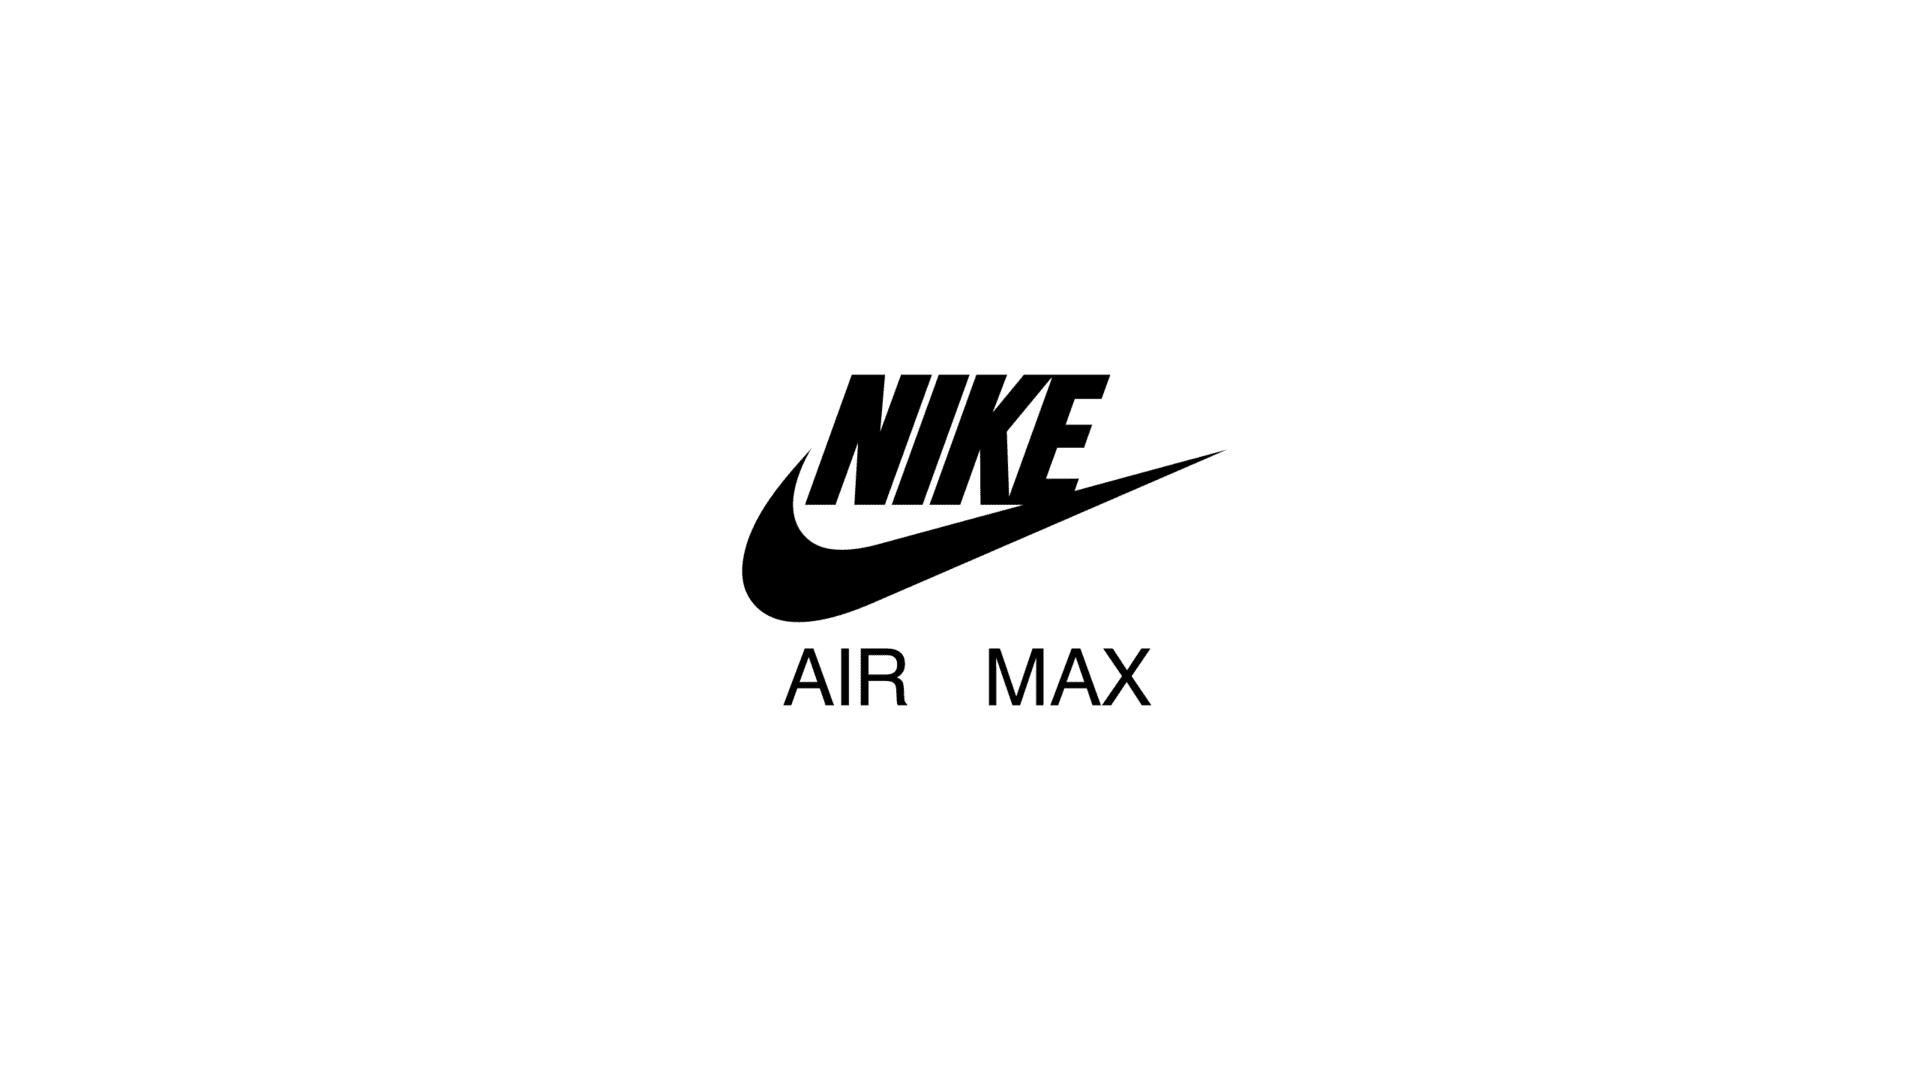 Air Max Day. Nike